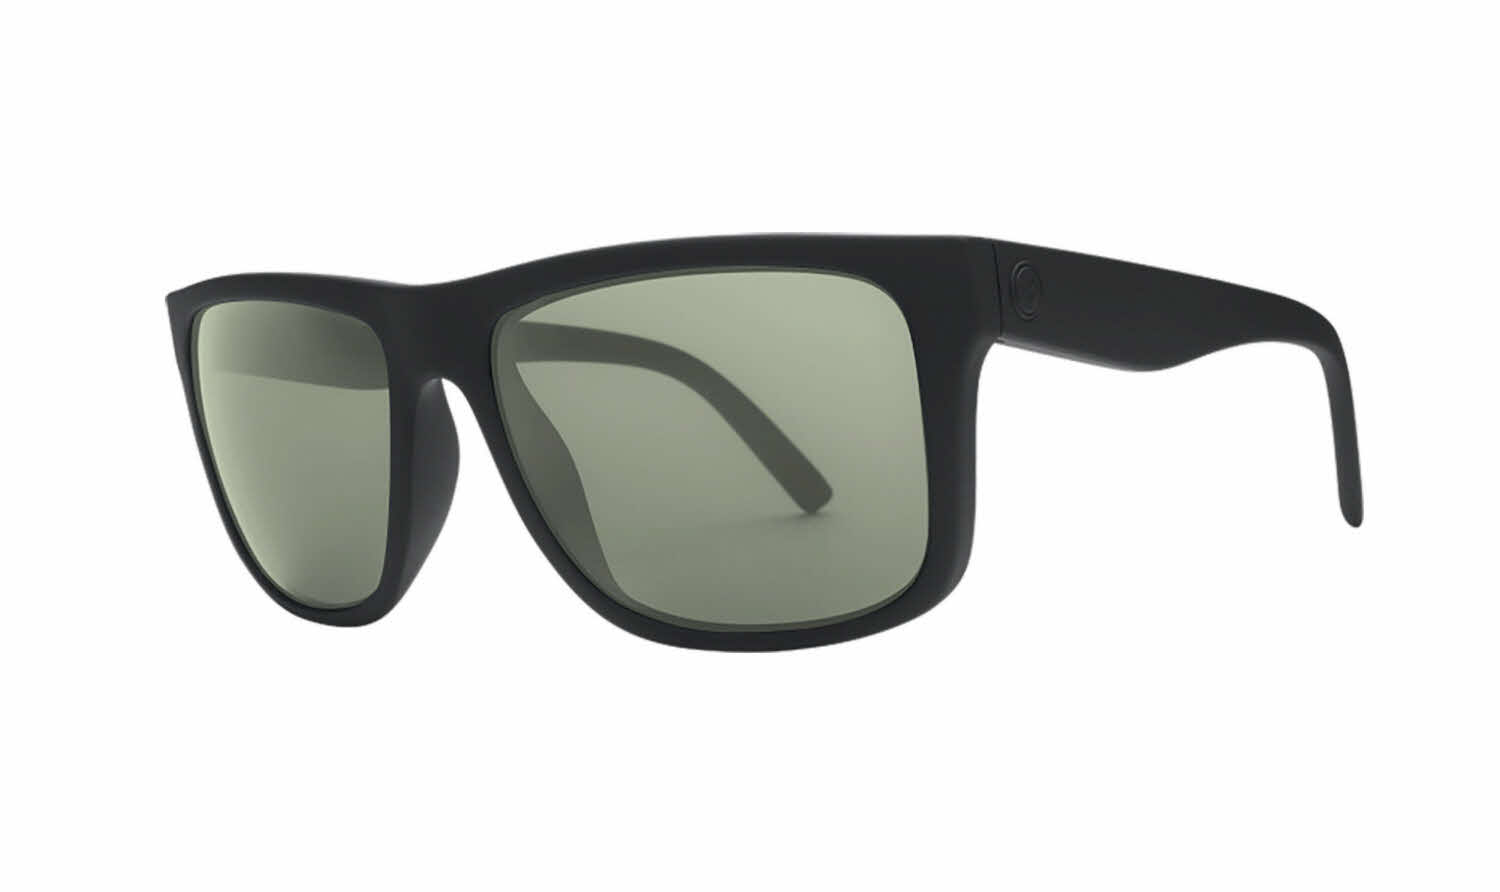 Electric Swingarm - XL Men's Sunglasses In Black